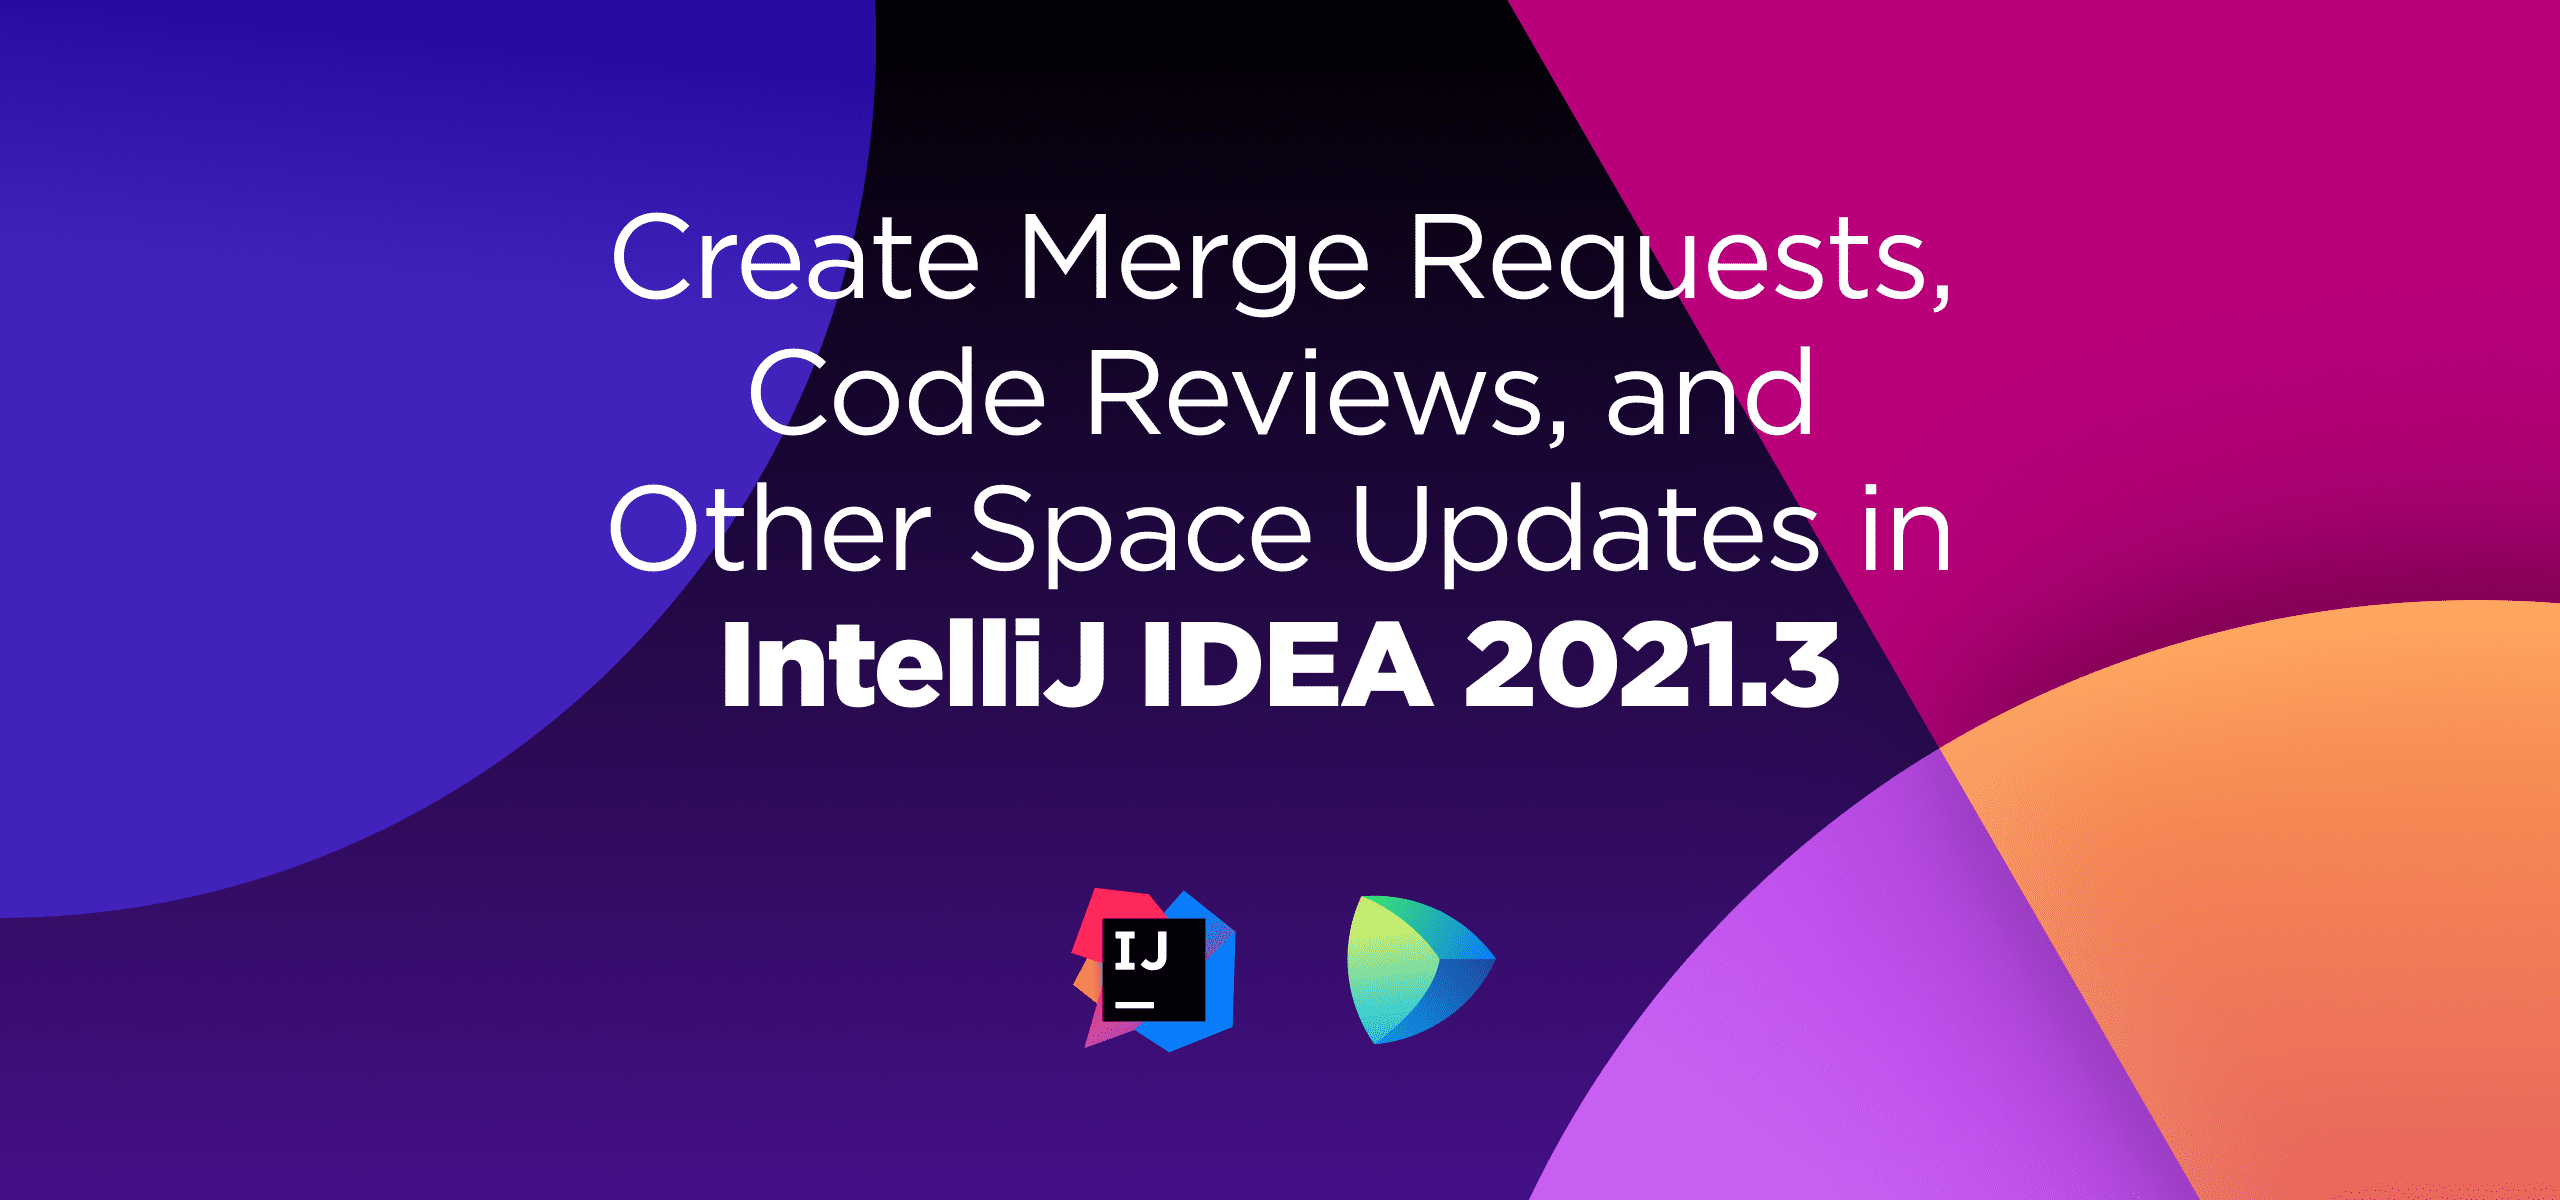 Space updates in IntelliJ IDEA 2021.3